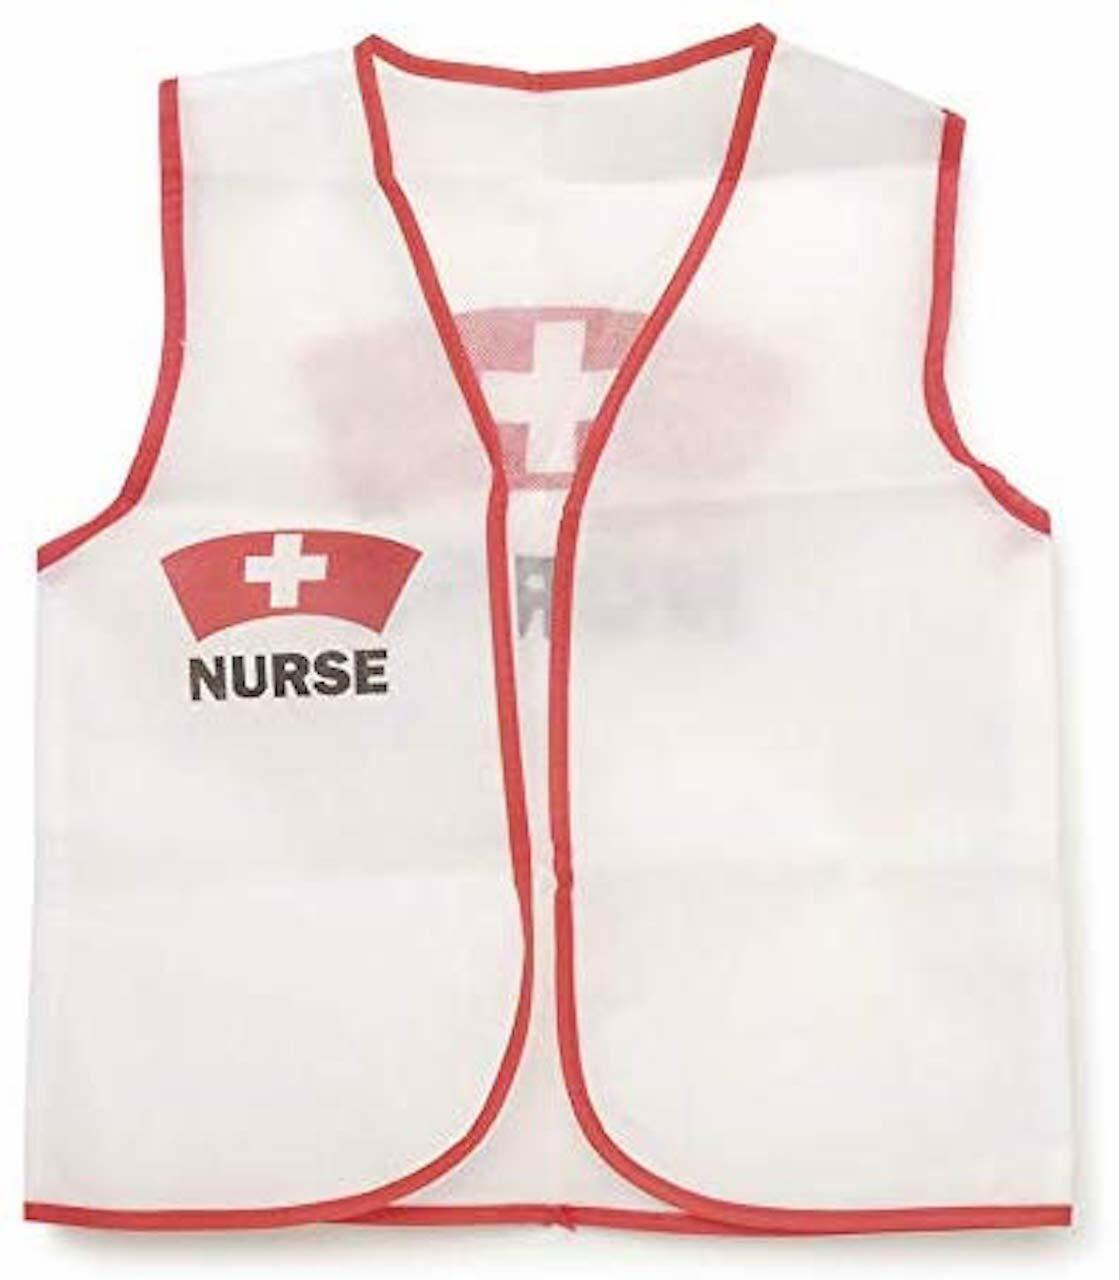 Darice Dress Up Vest - Nurse - 16 x 20 inches